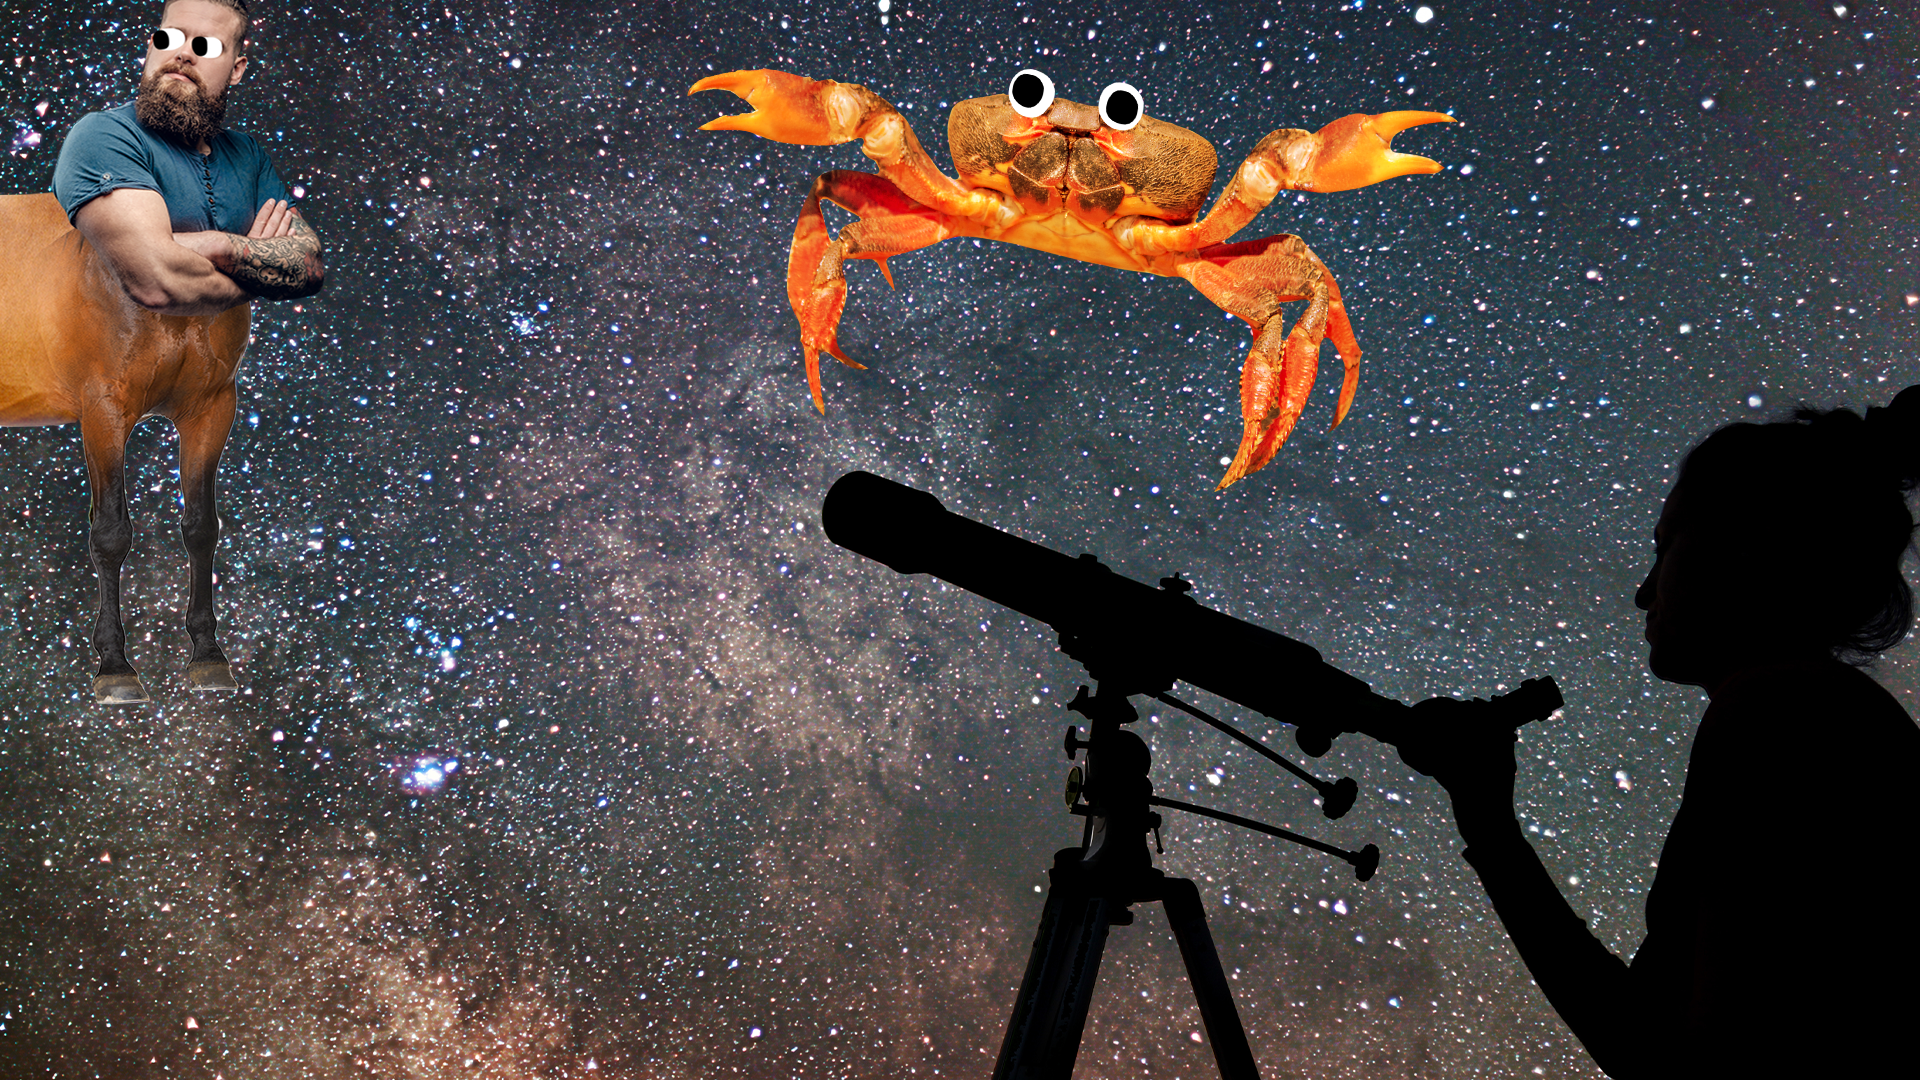 Telescope, night sky and centaur and crab